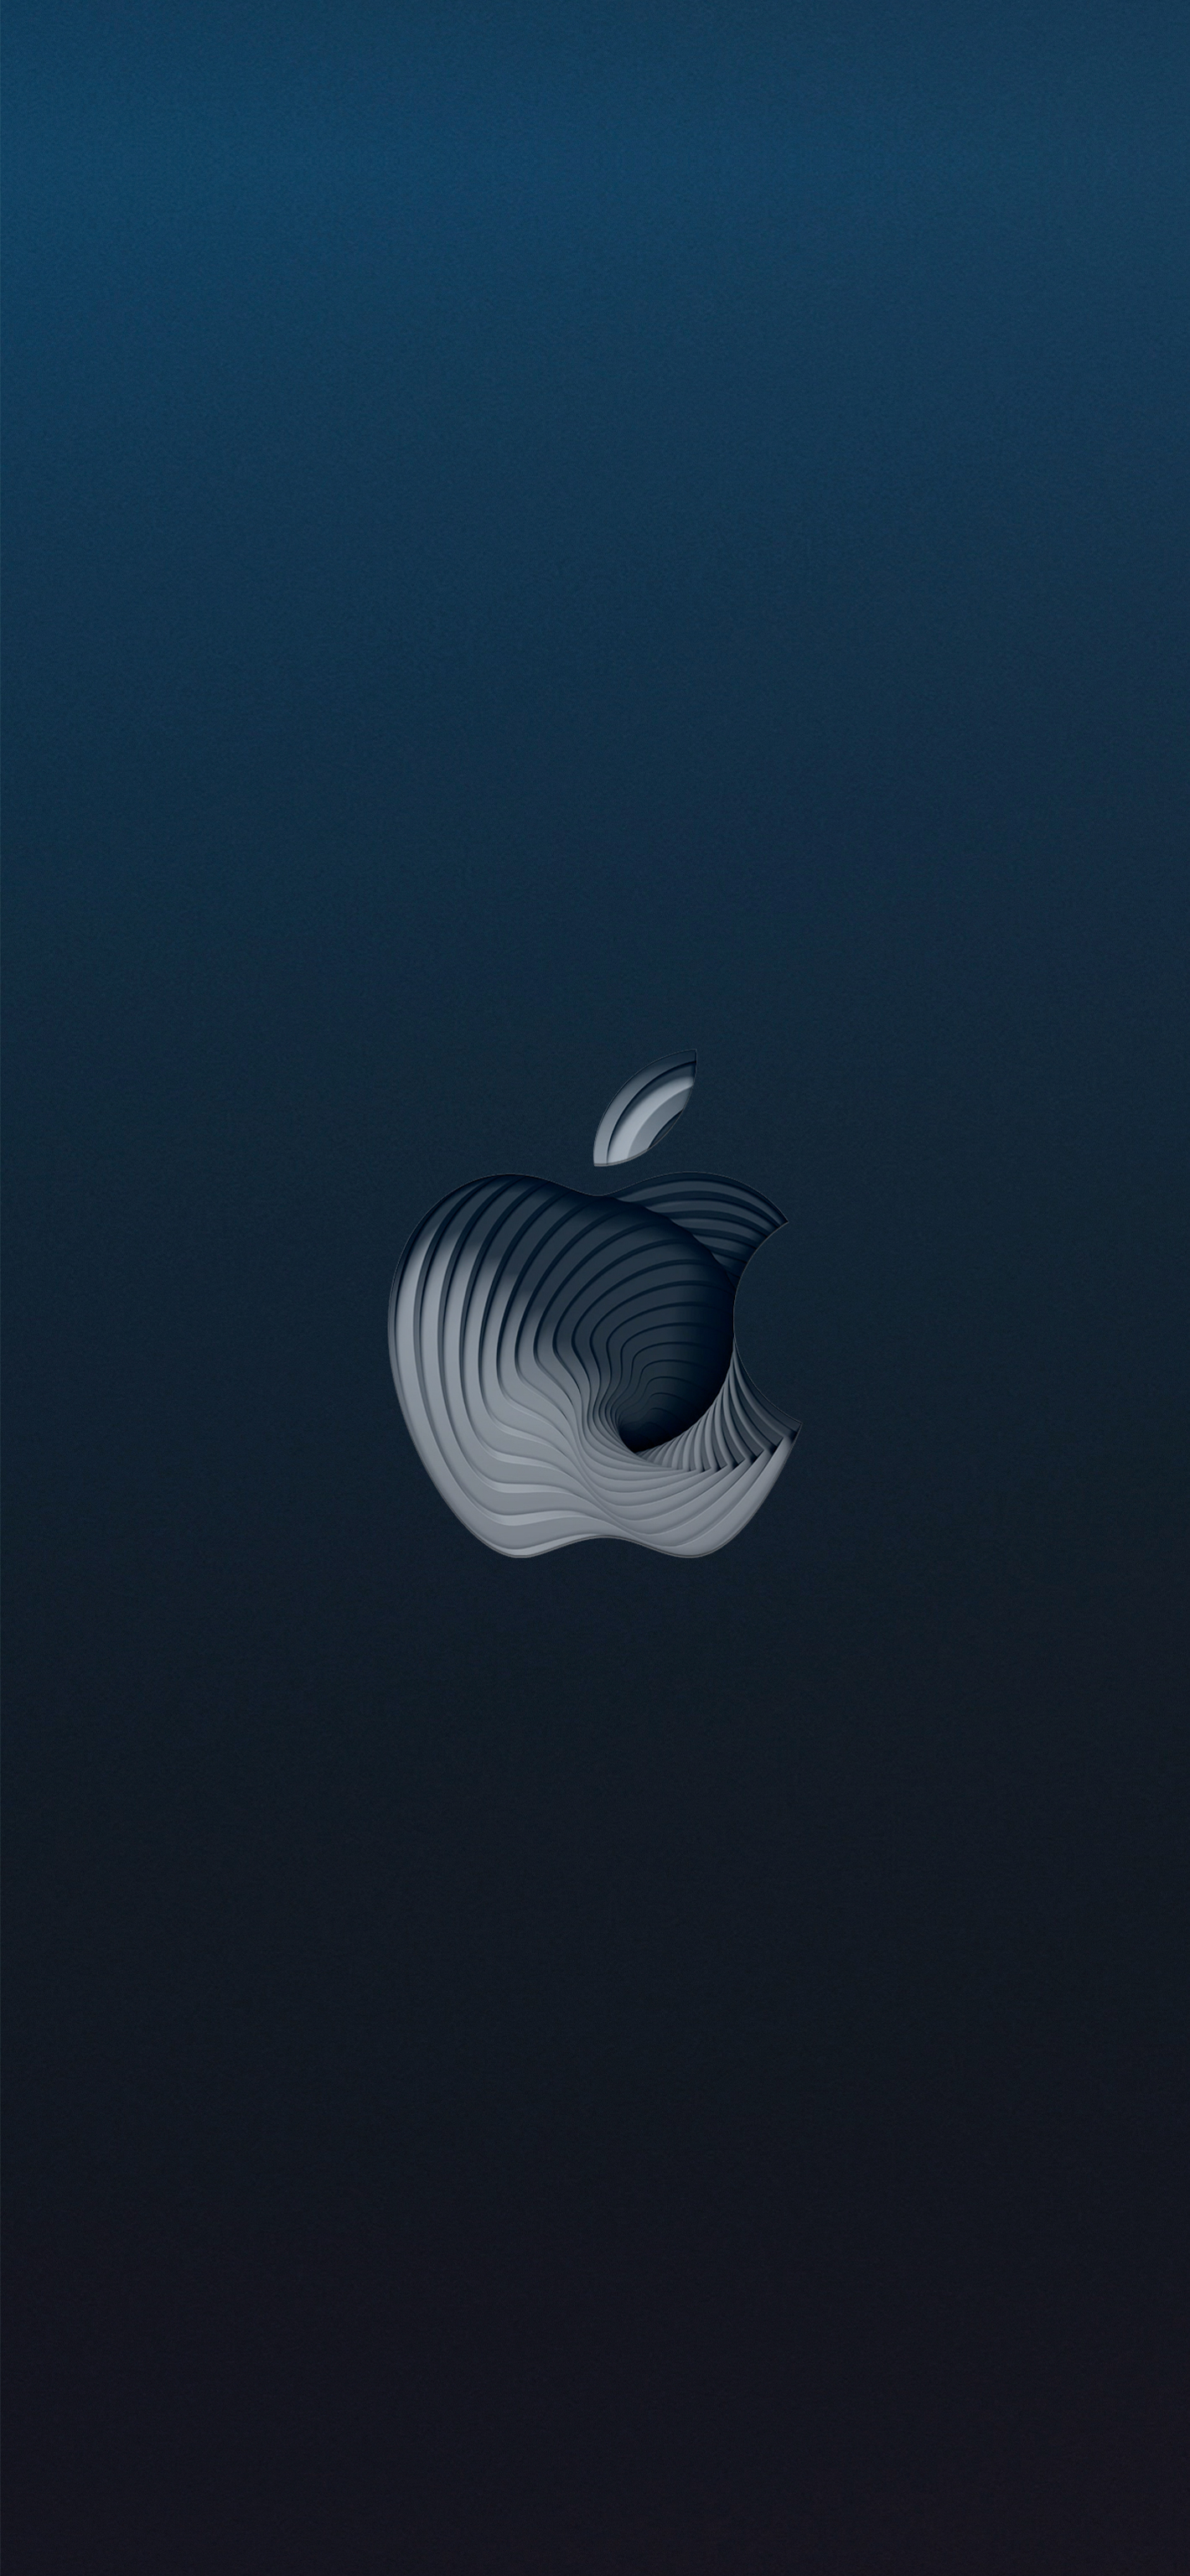 Apple Mac Event Logo Dark Illustration Art Blue iPhone Wallpapers Free  Download